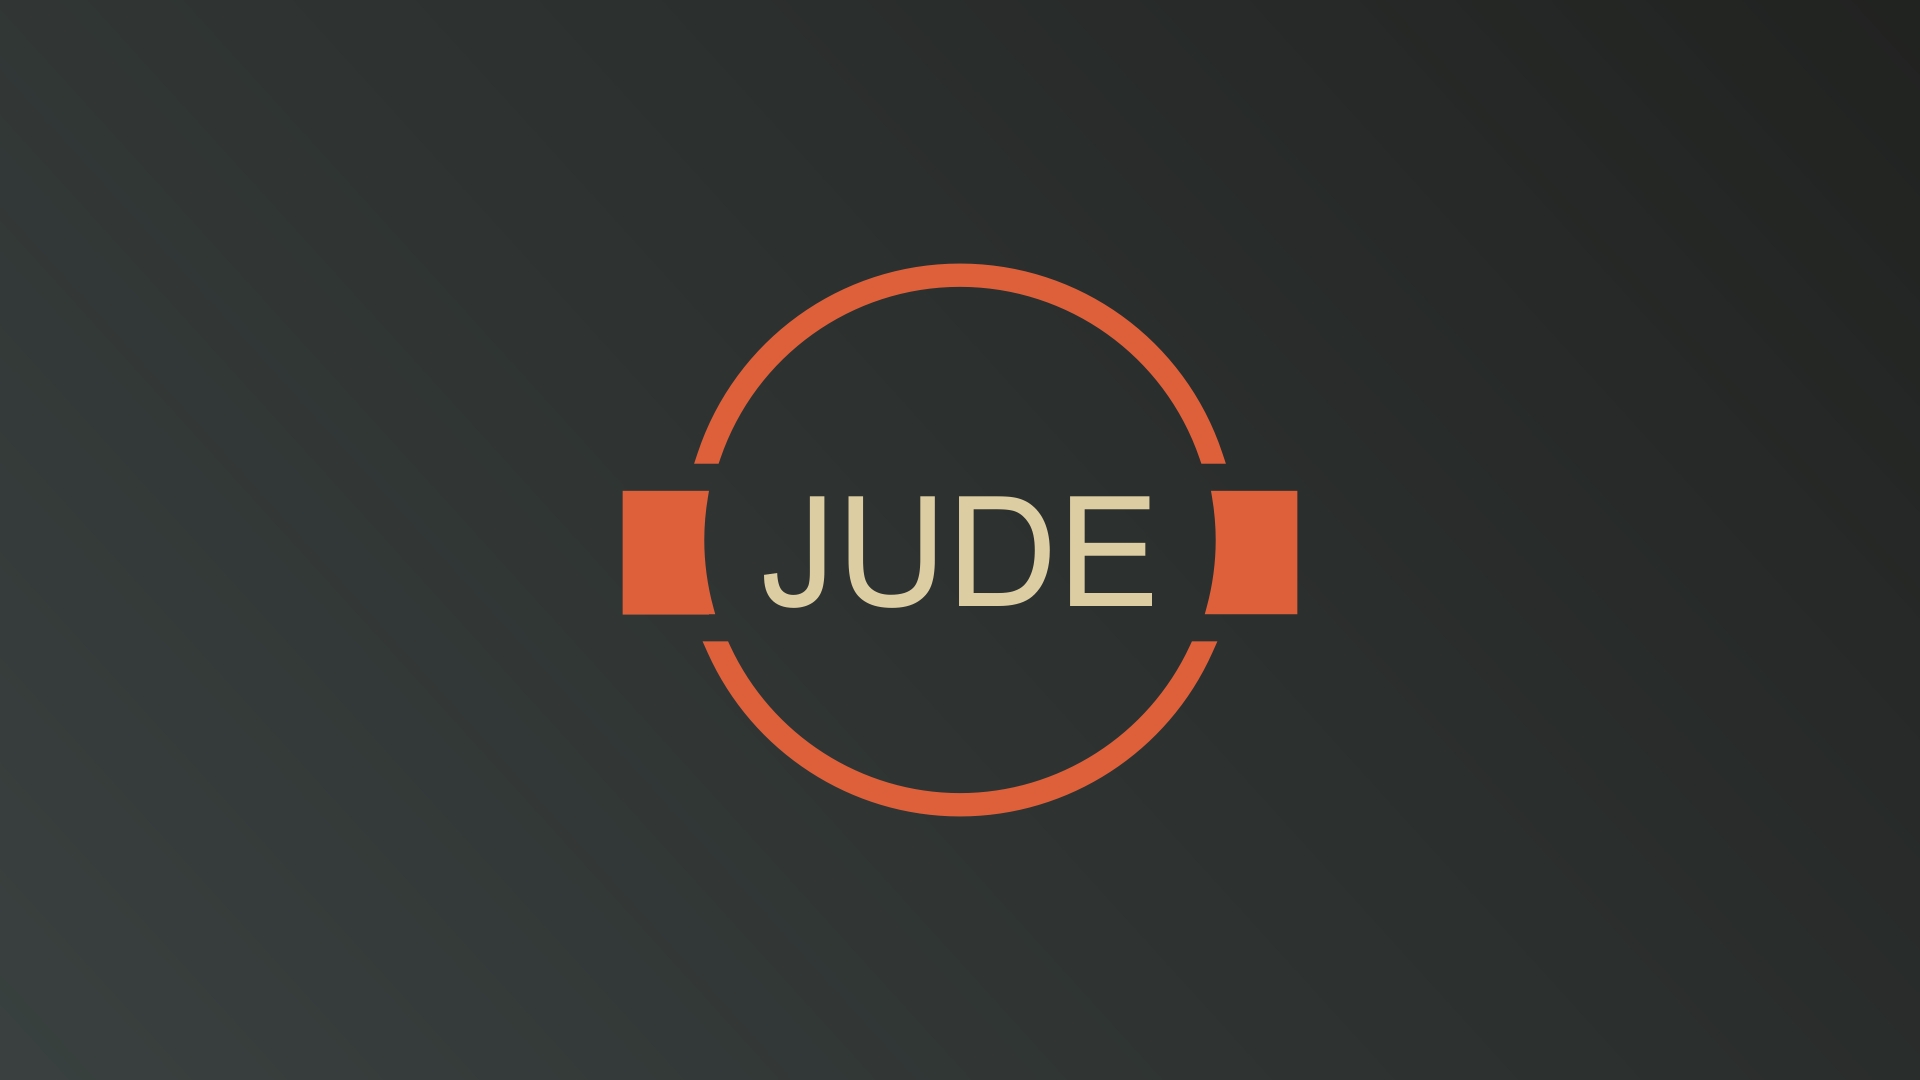 01 Introducing Jude